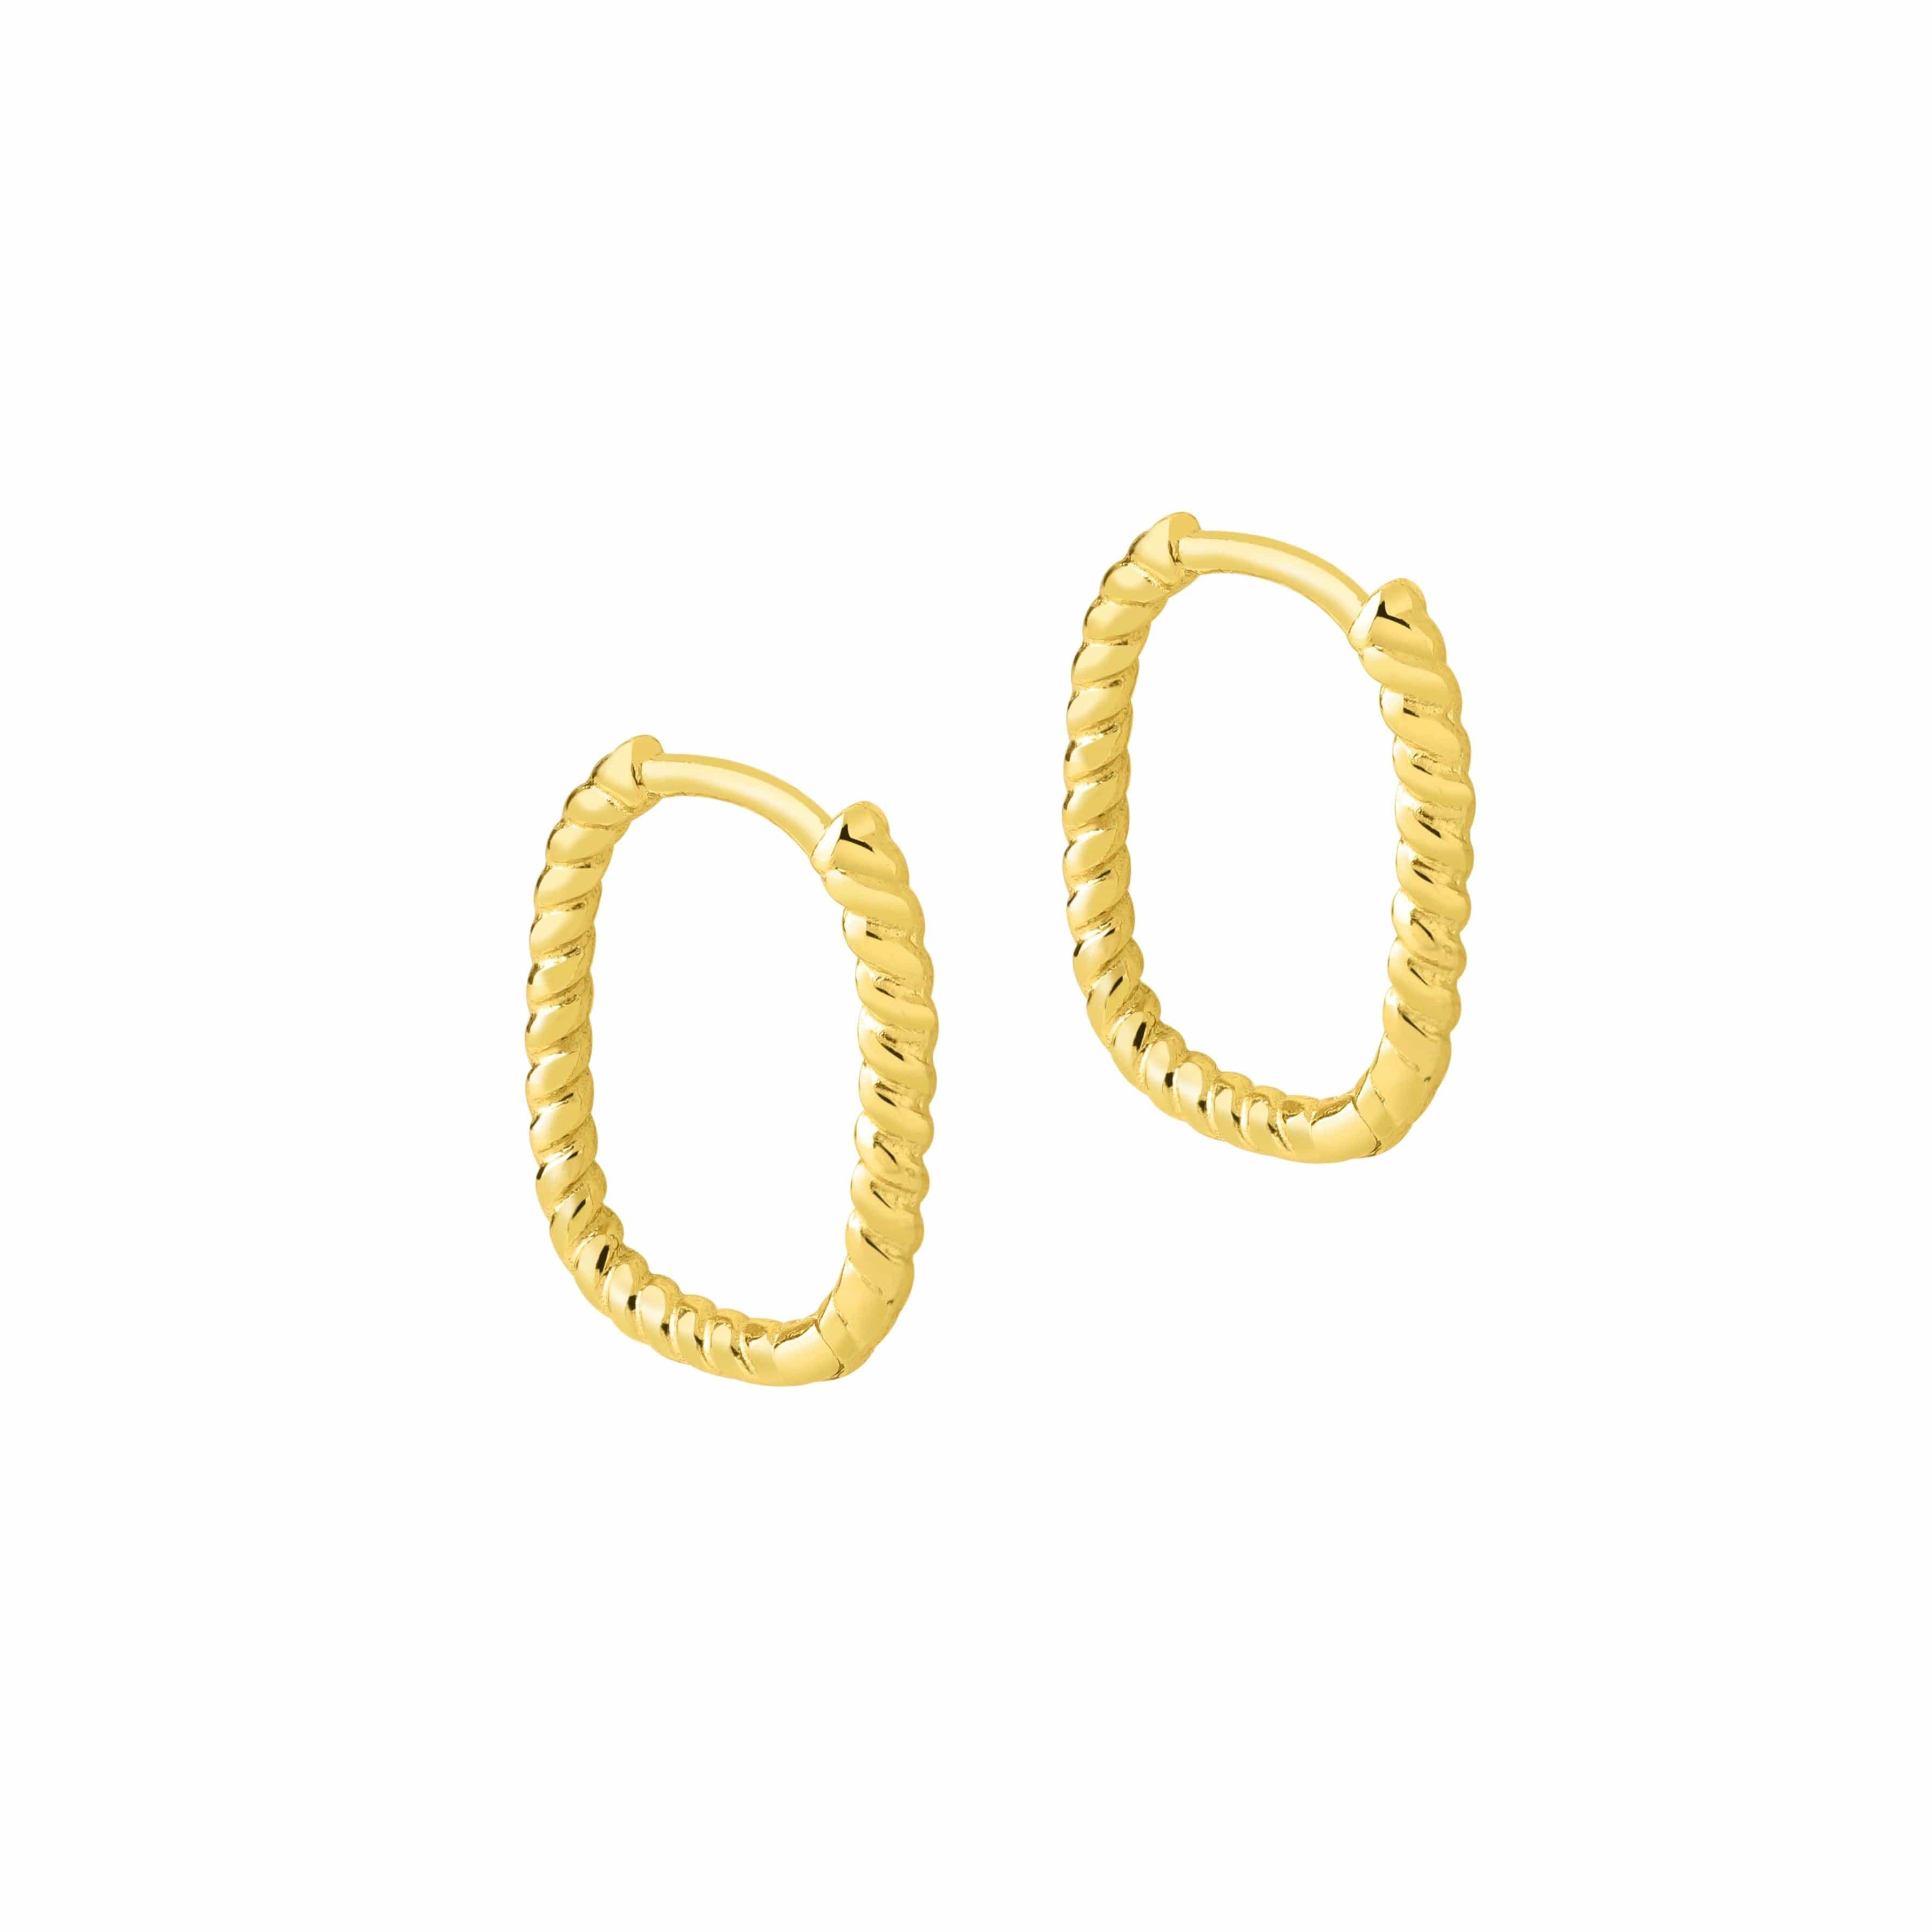 Rope Square Hoop Earrings Gold plated